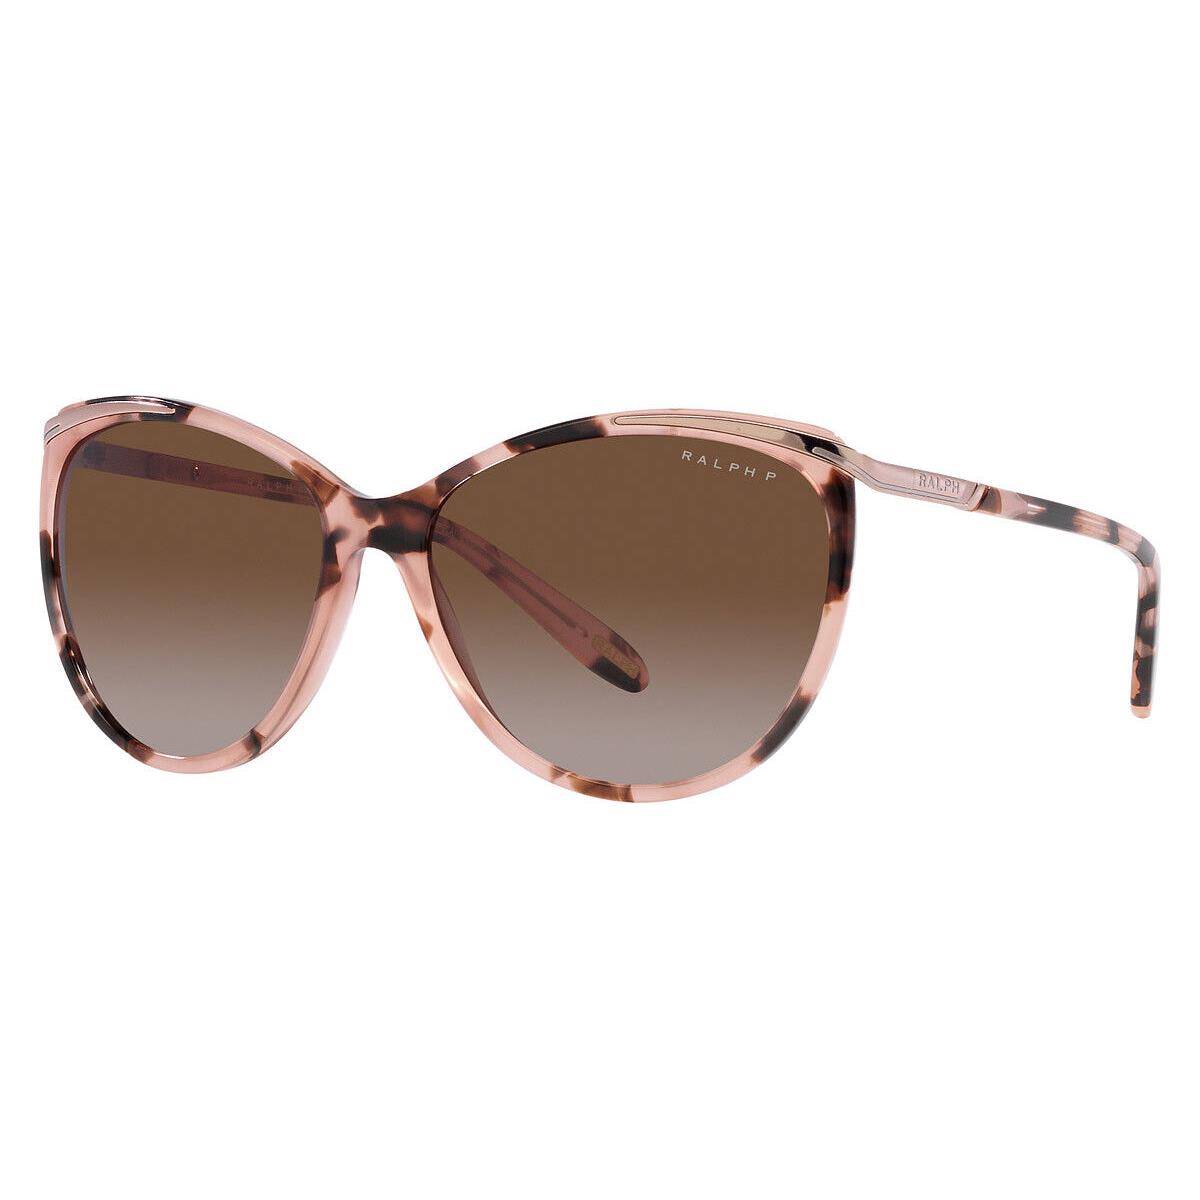 Ralph Lauren RA5150 Sunglasses Shiny Pink Havana Polarized Gradient Brown 59mm